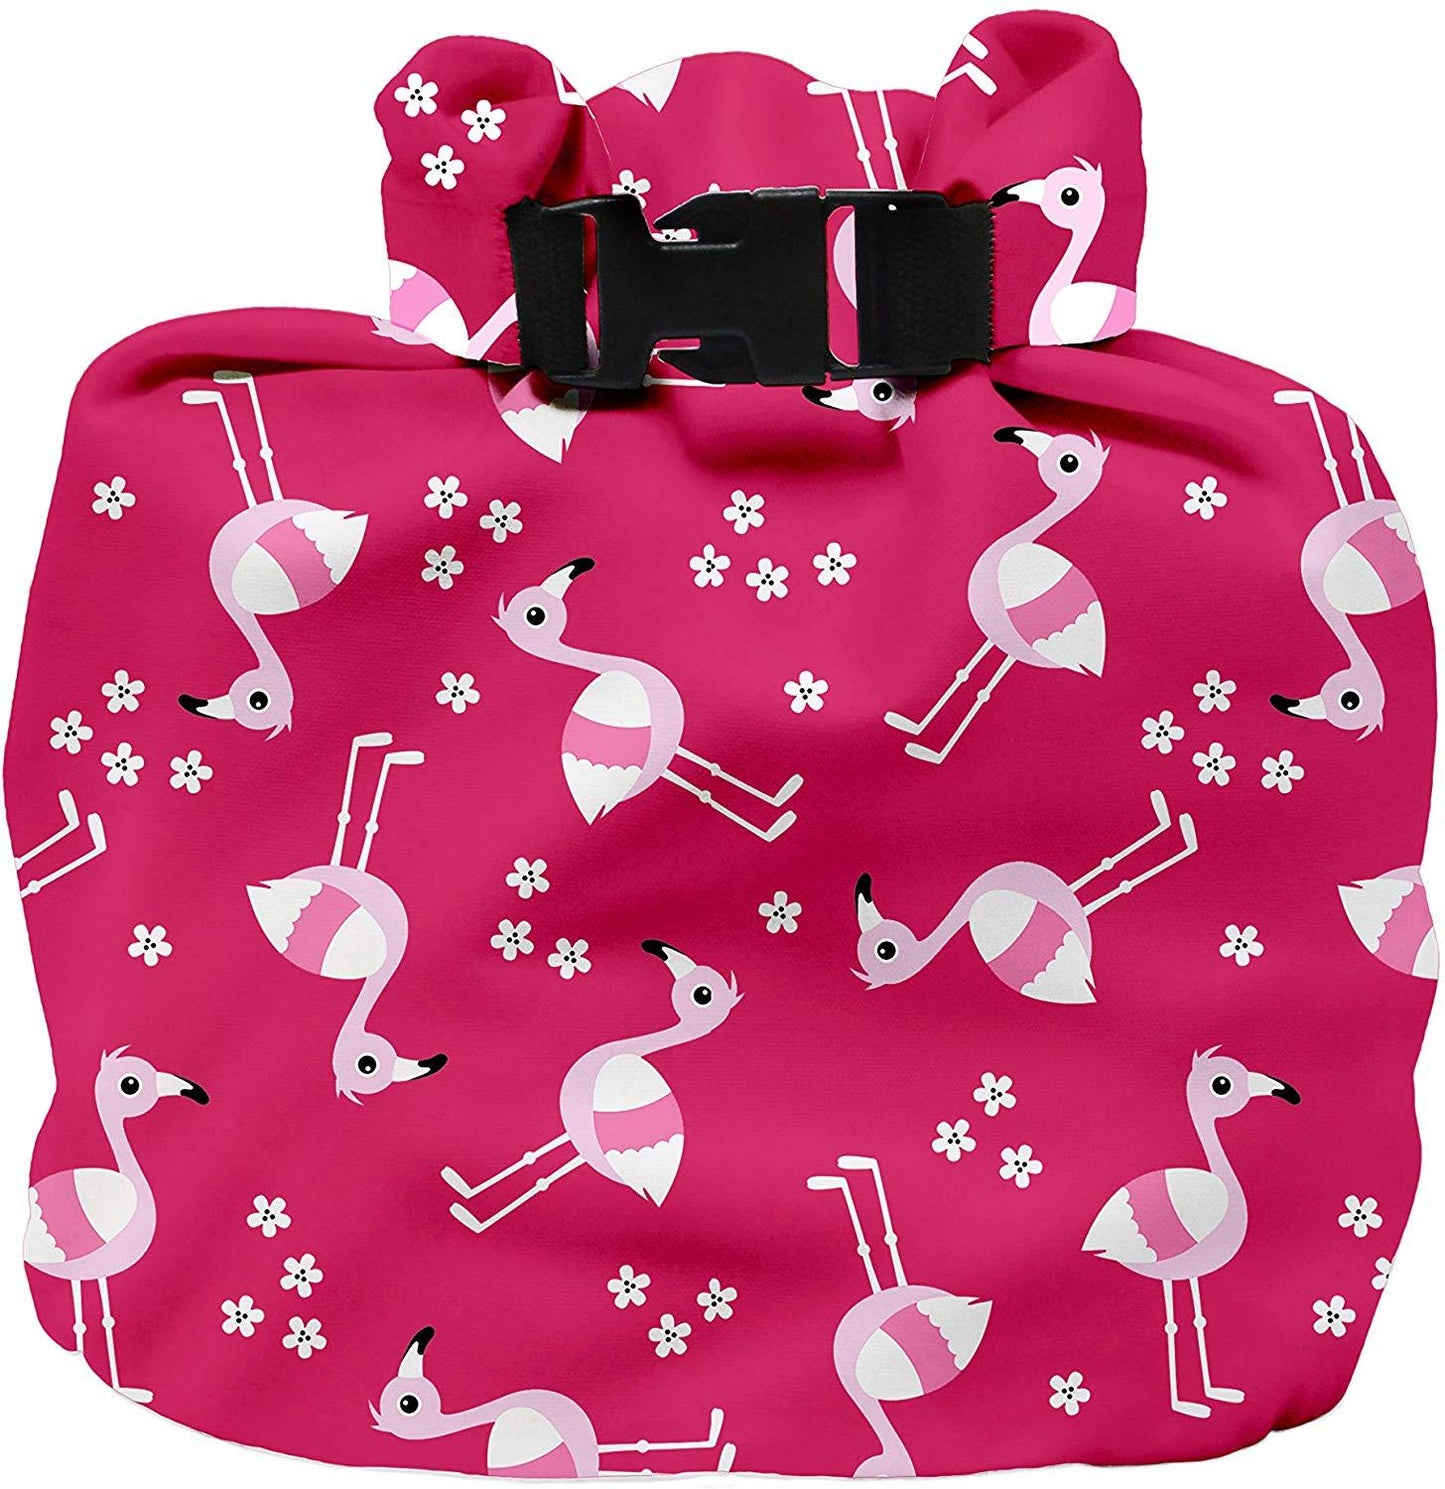 Bambino Mio - Mio Saco para transportar fraldas ou roupas molhadas Anne Claire Baby Store Pink Flamingo 